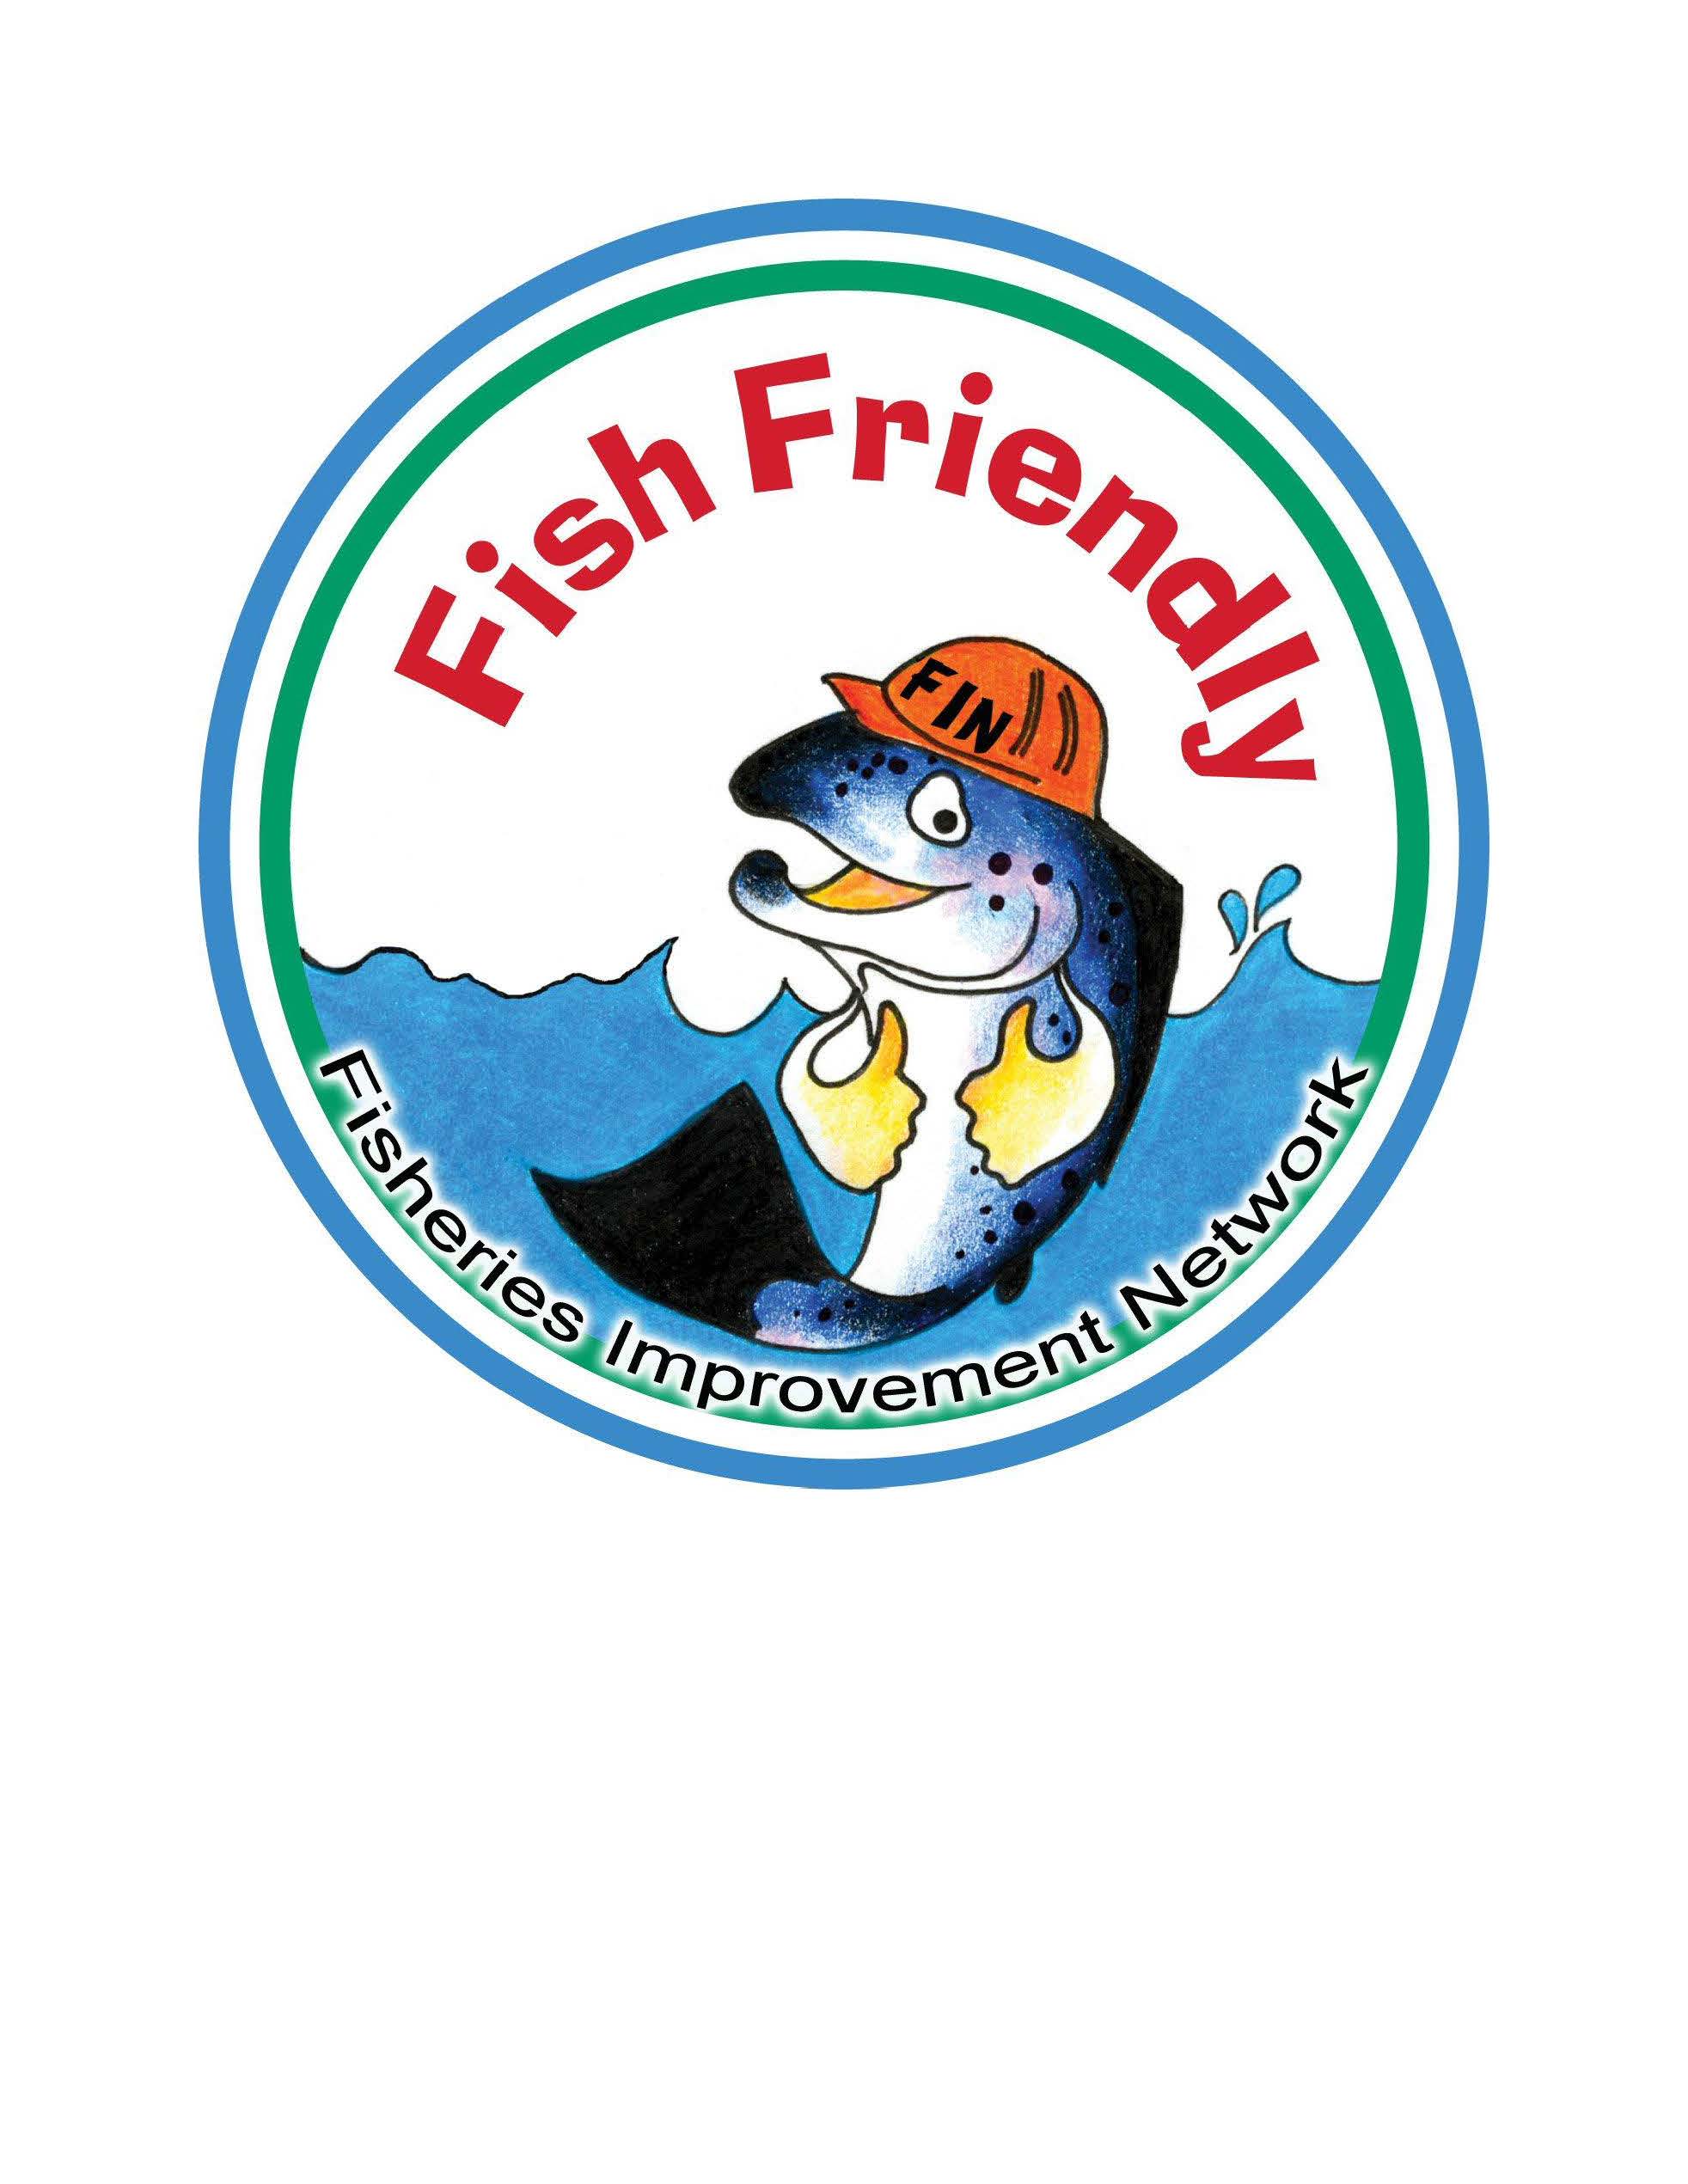 Fisheries Improvement Network